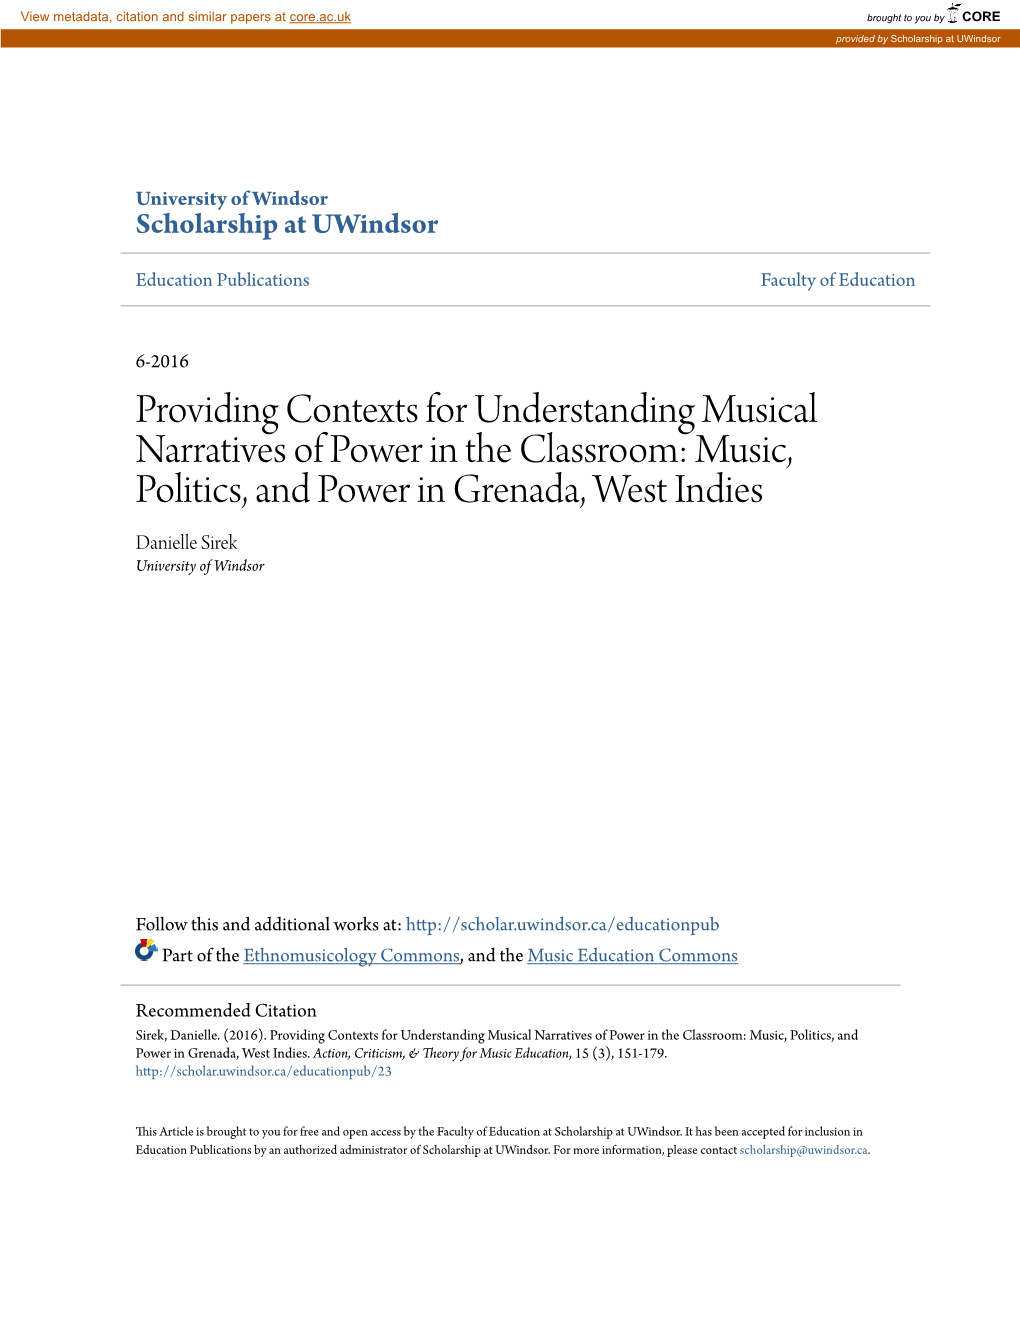 Music, Politics, and Power in Grenada, West Indies Danielle Sirek University of Windsor